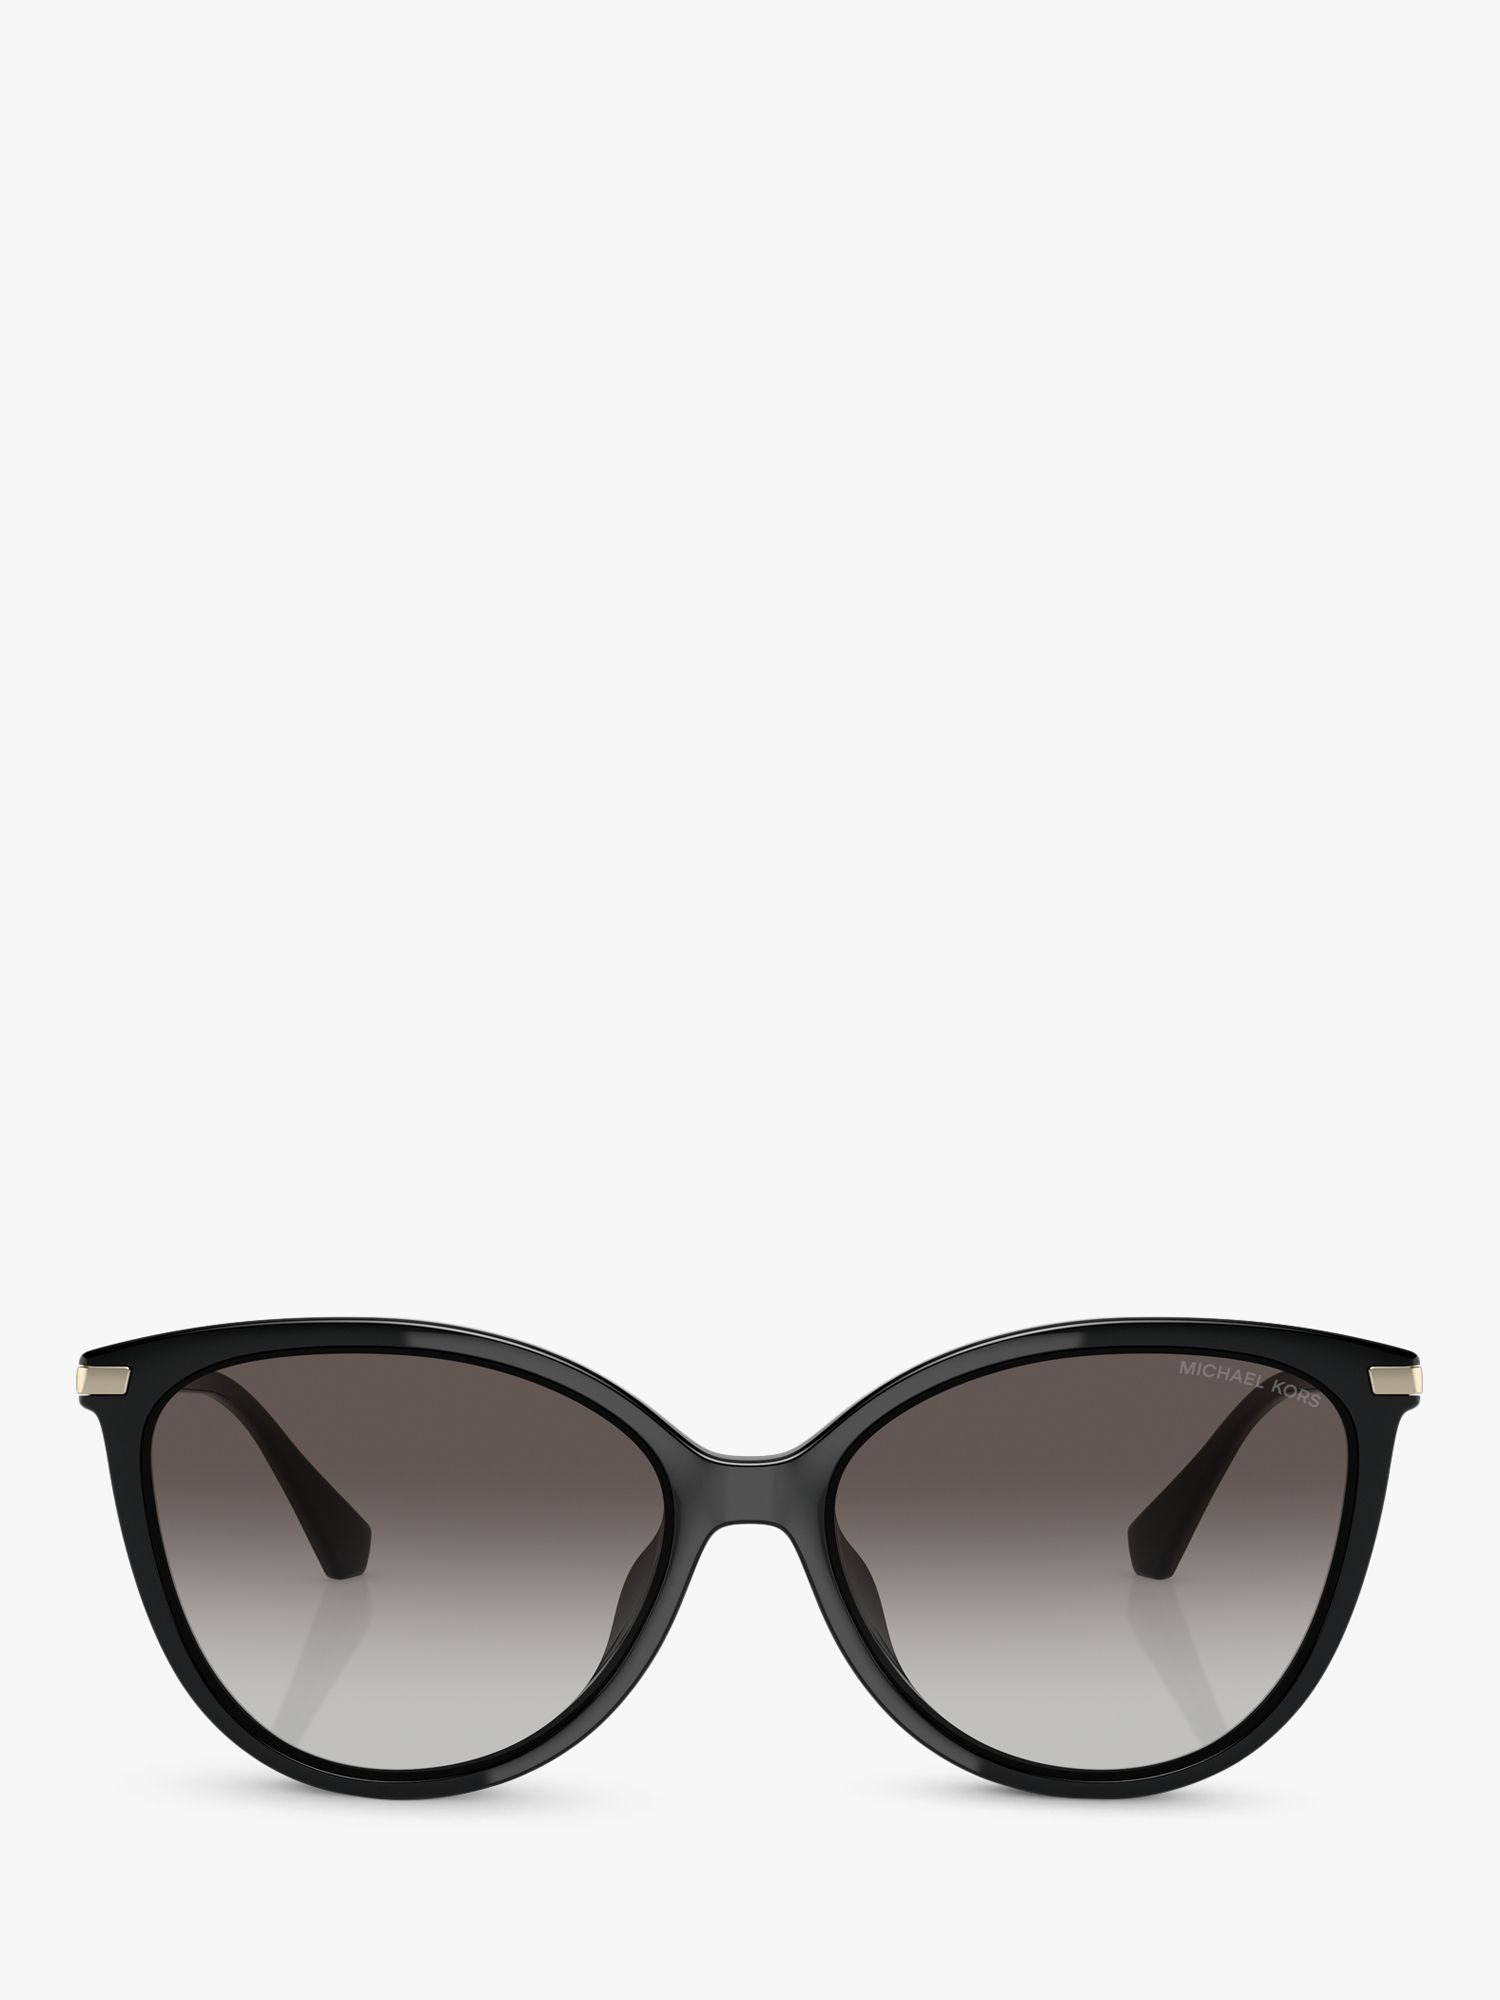 Michael Kors MK2184U Women's Dupont Butterfly Sunglasses, Black/Grey Gradient